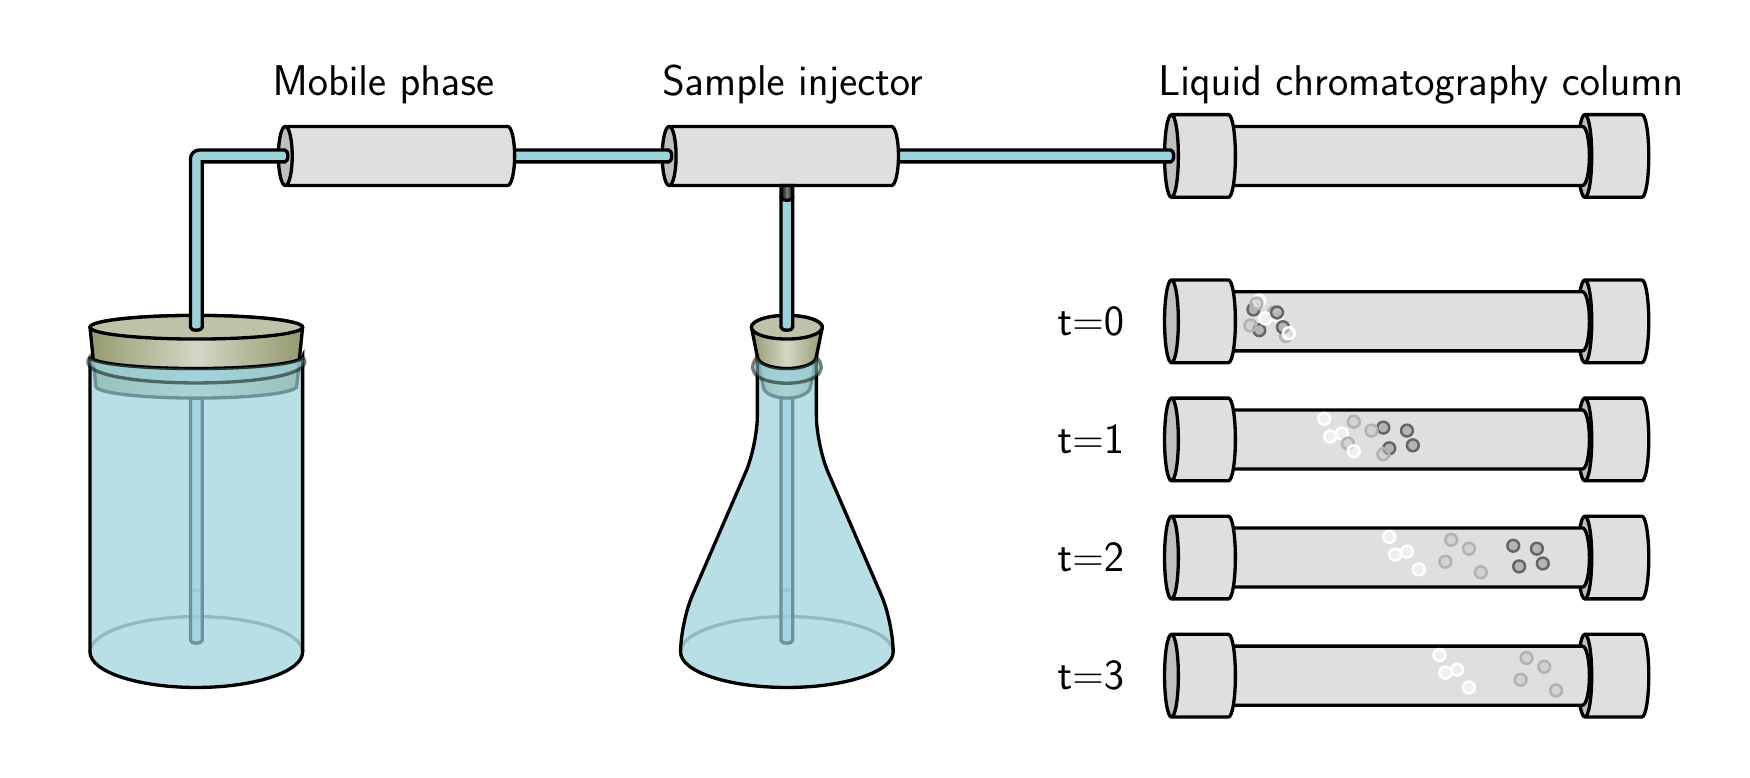 Illustration for liquid chromatography